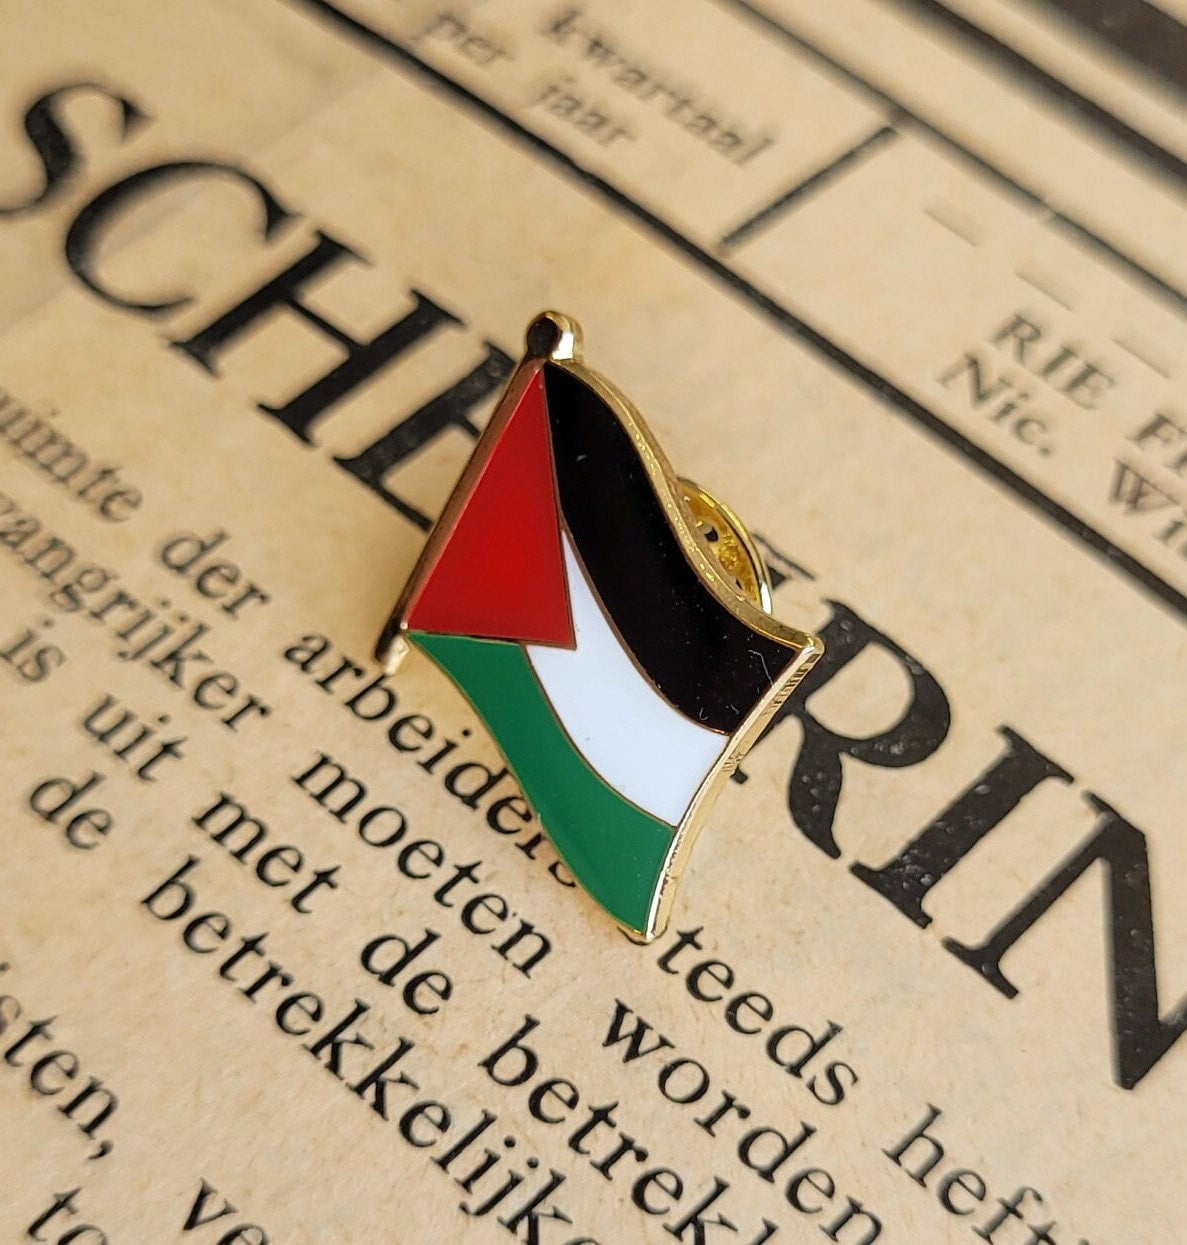 Palestine Palestinian Flag Pin Badge Brooch